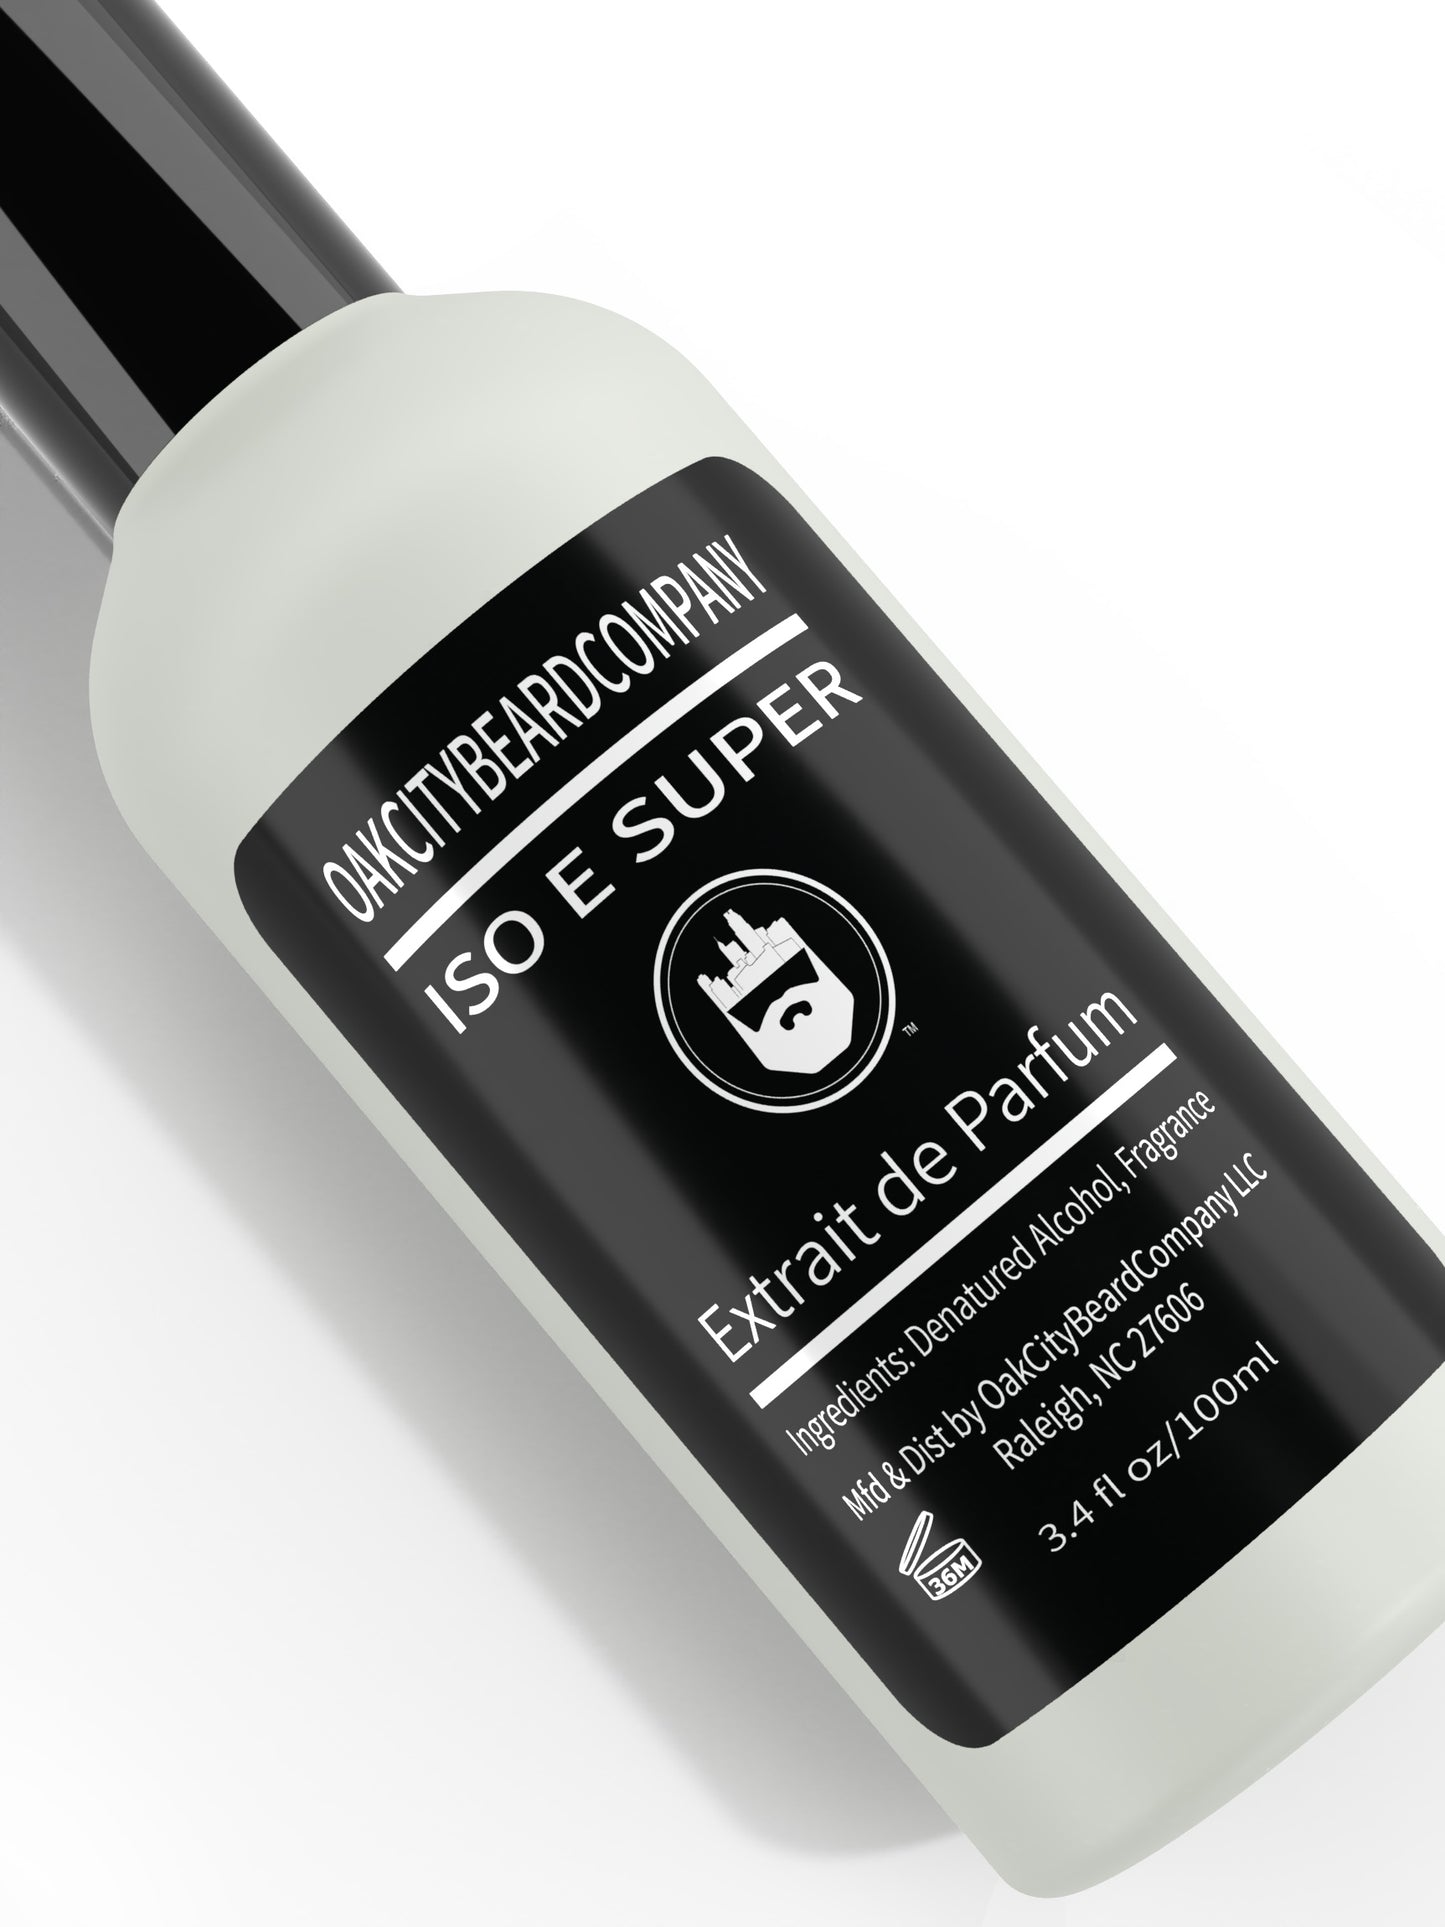 Iso E Super (Cologne) Extrait de Parfum by Oak City Beard Company